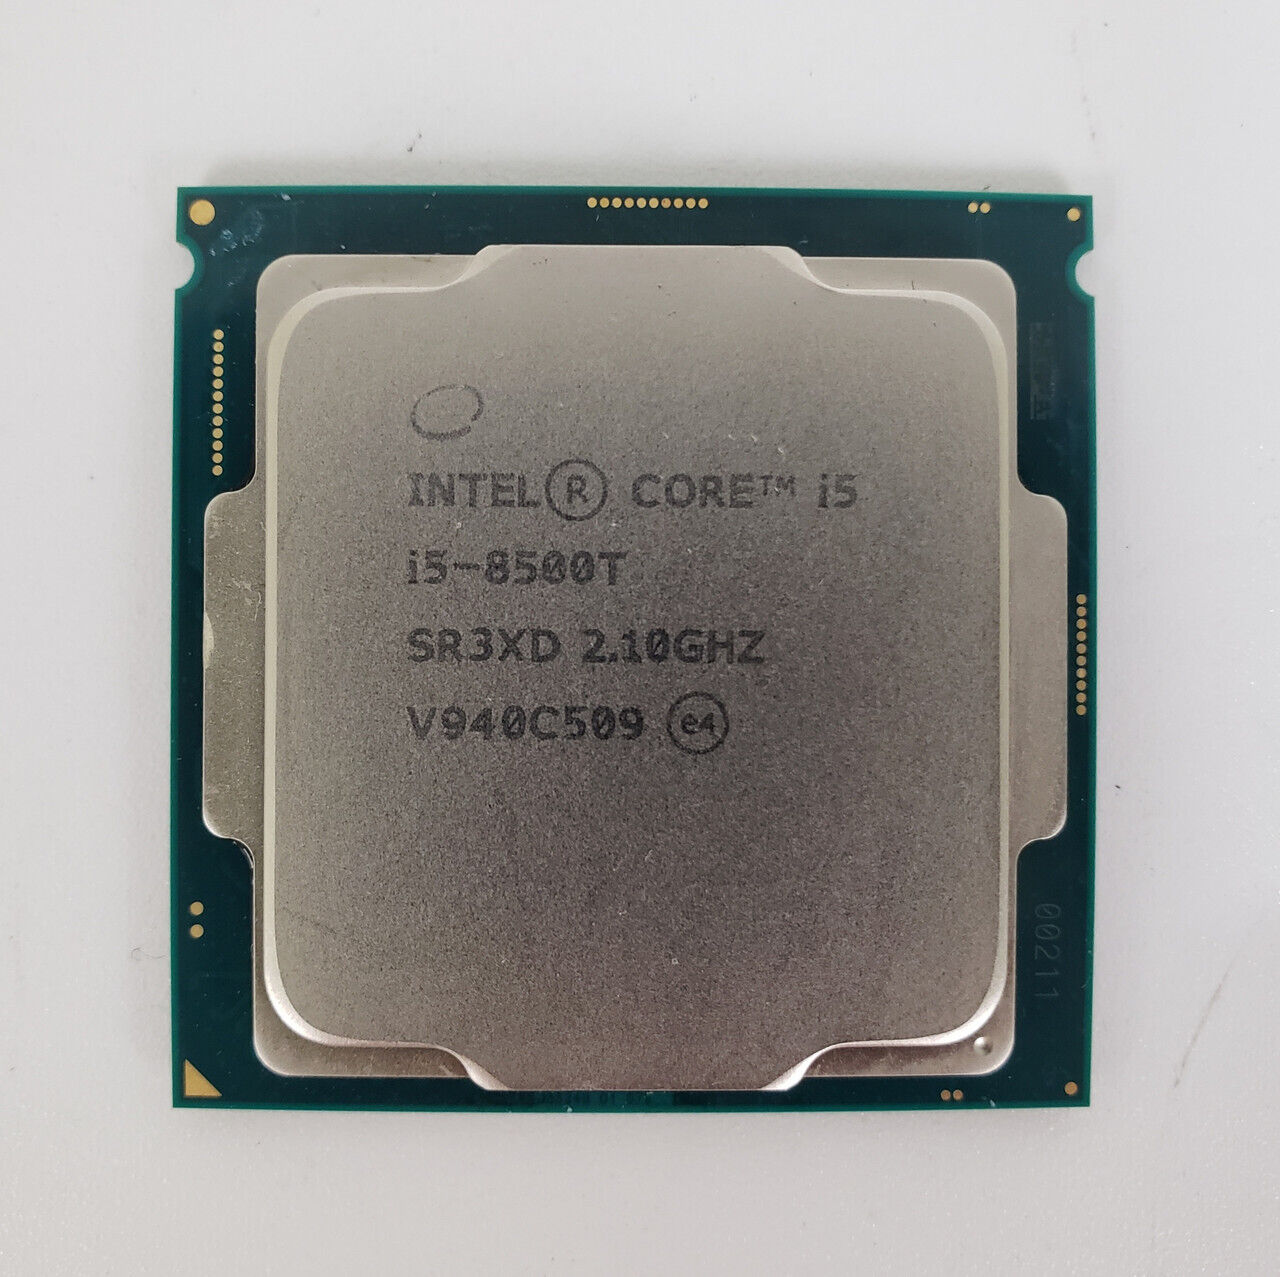 Intel Core i5-8500T SR3XD 2.10GHz Processor | Grade A